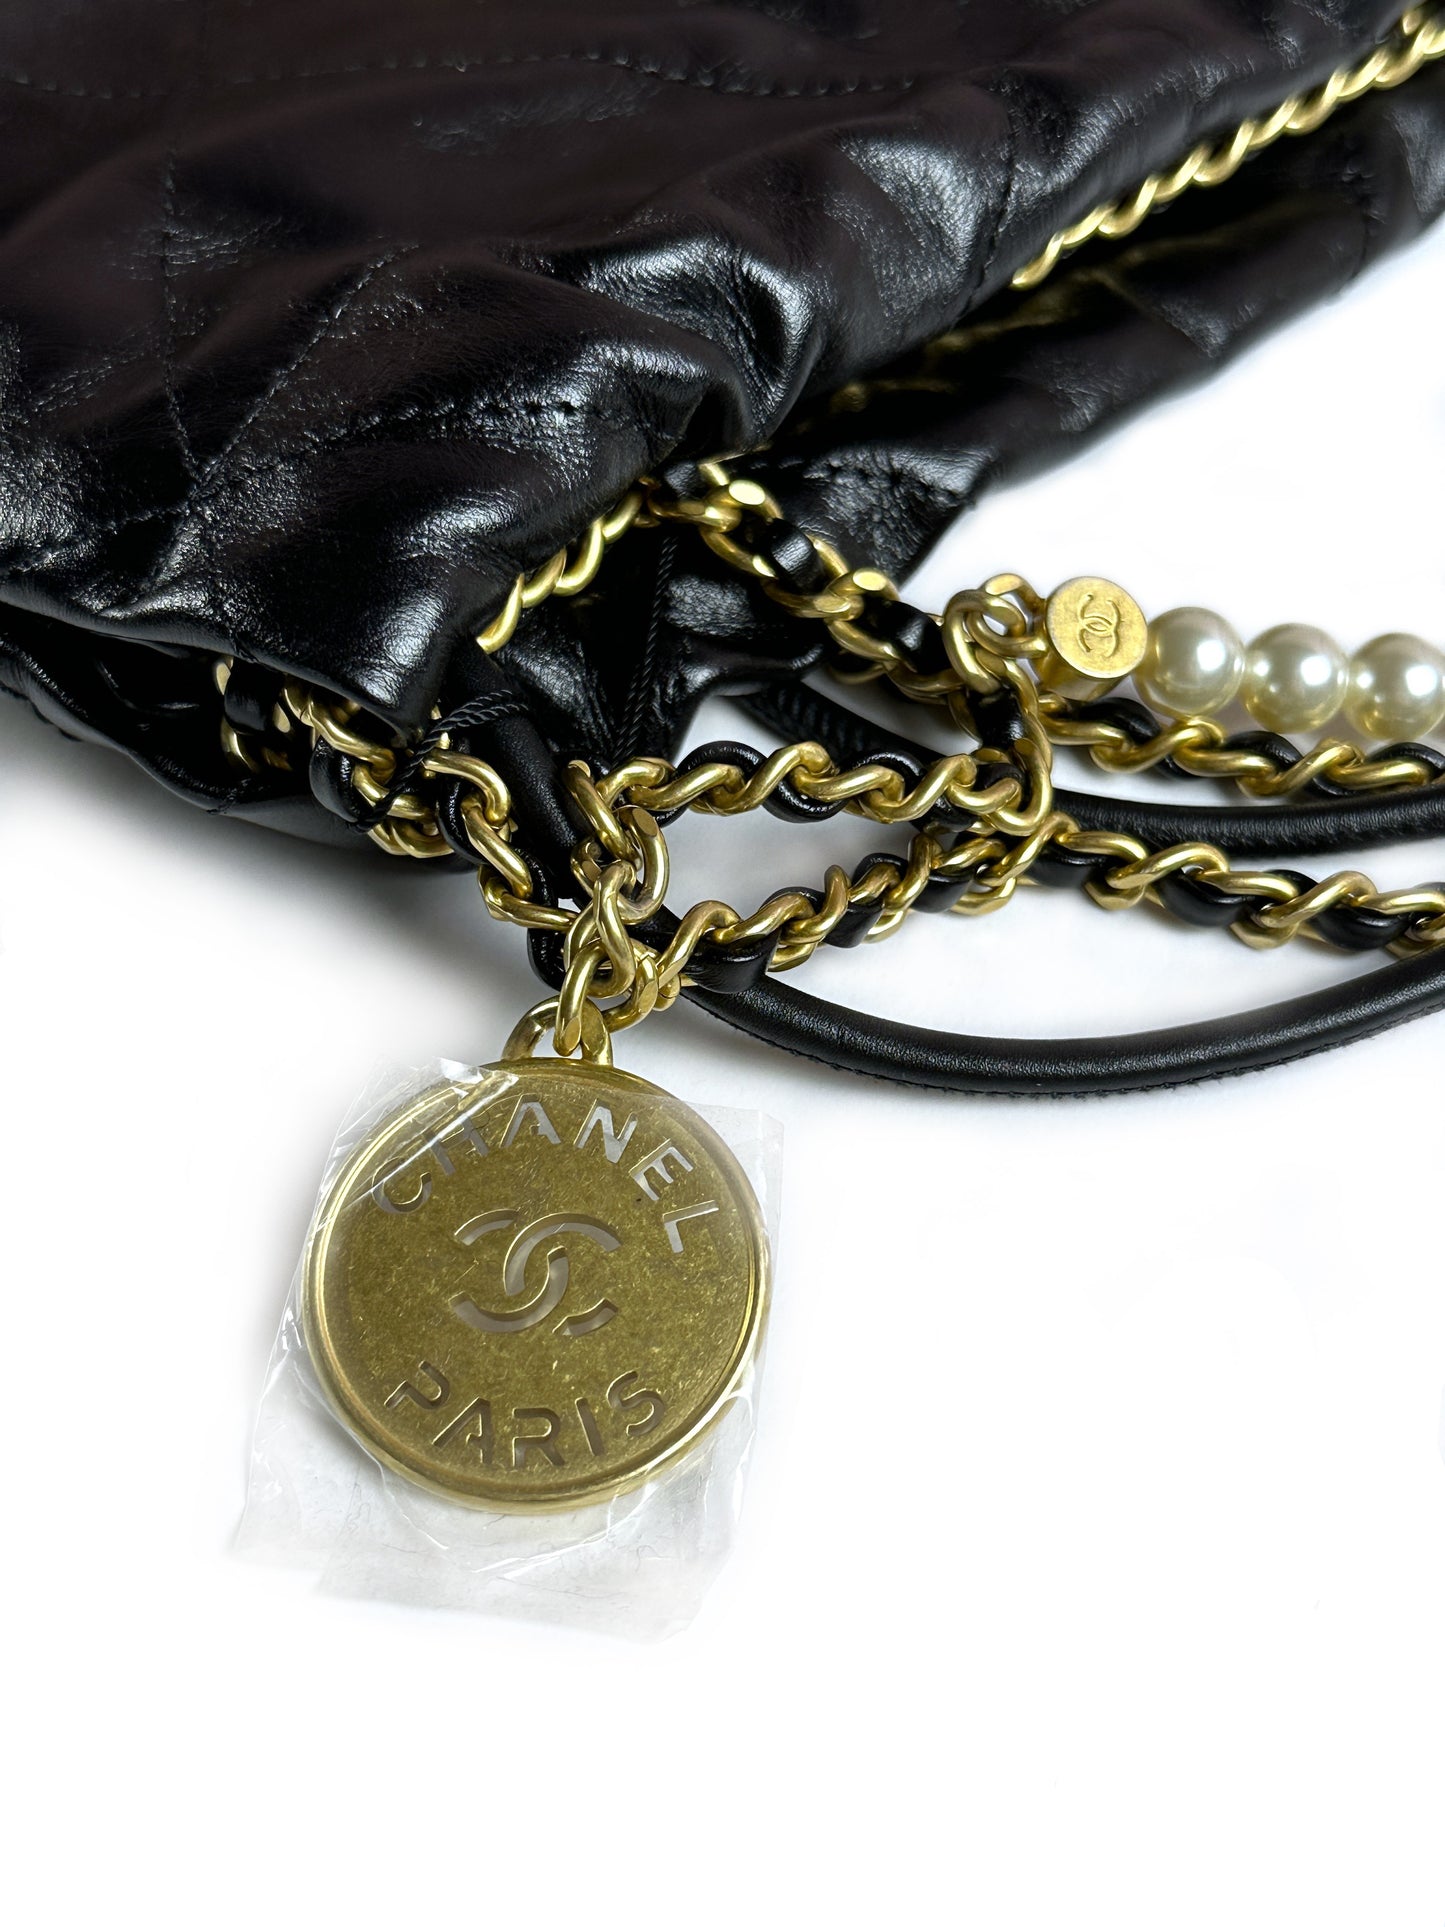 CHANEL 22 mini bag 珍珠鍊帶款 - 黑金